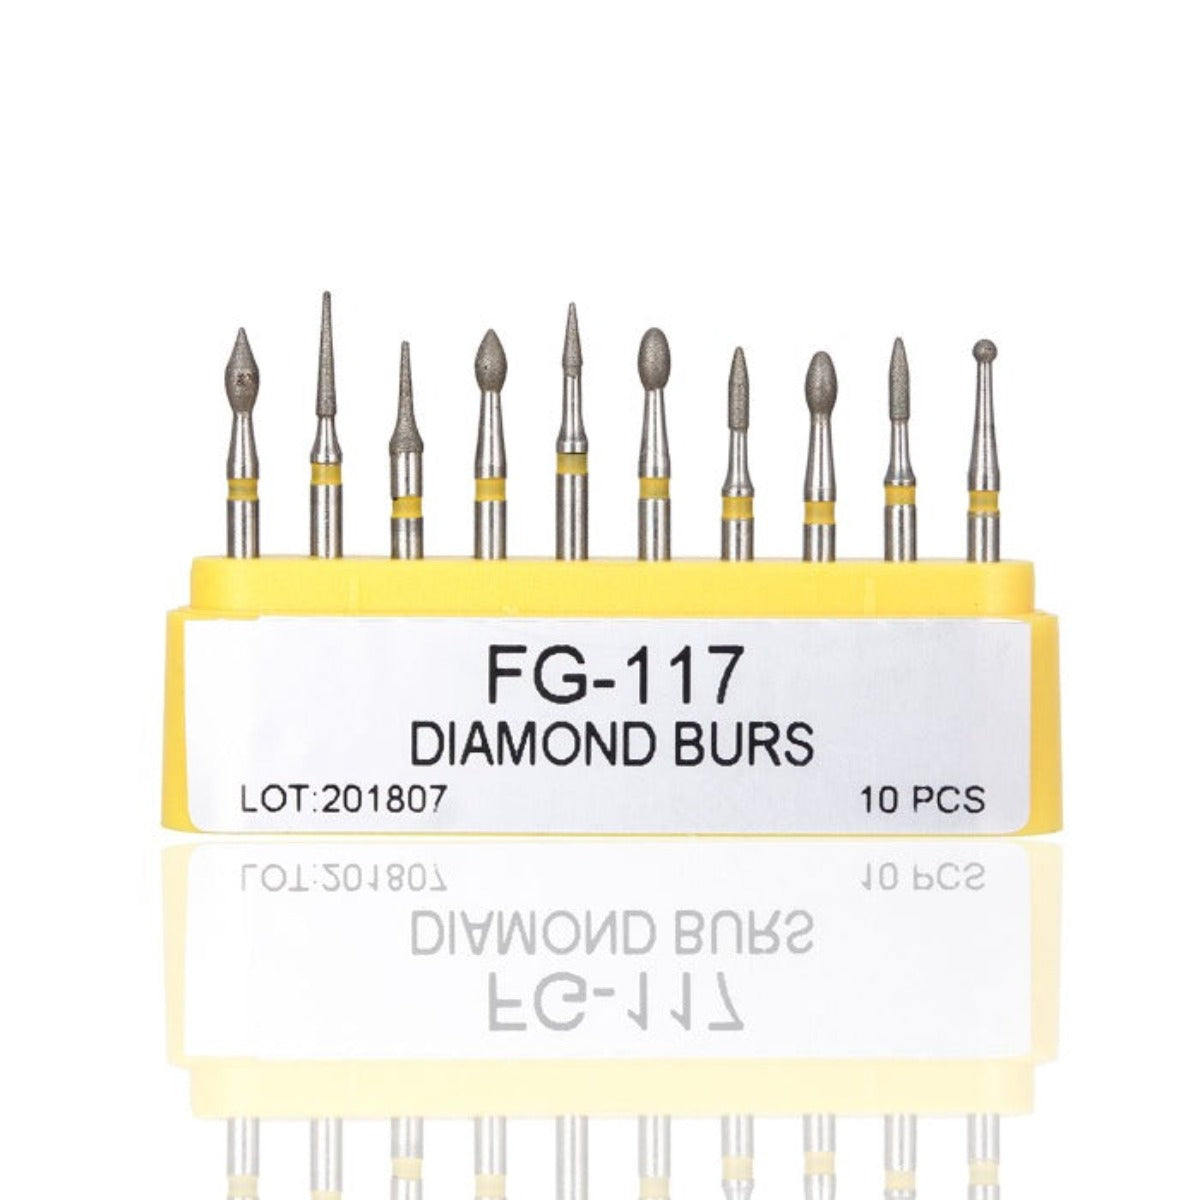 Dental Diamond Bur FG-117 Composite Repair Kit 10pcs/Kit - pairaydental.com